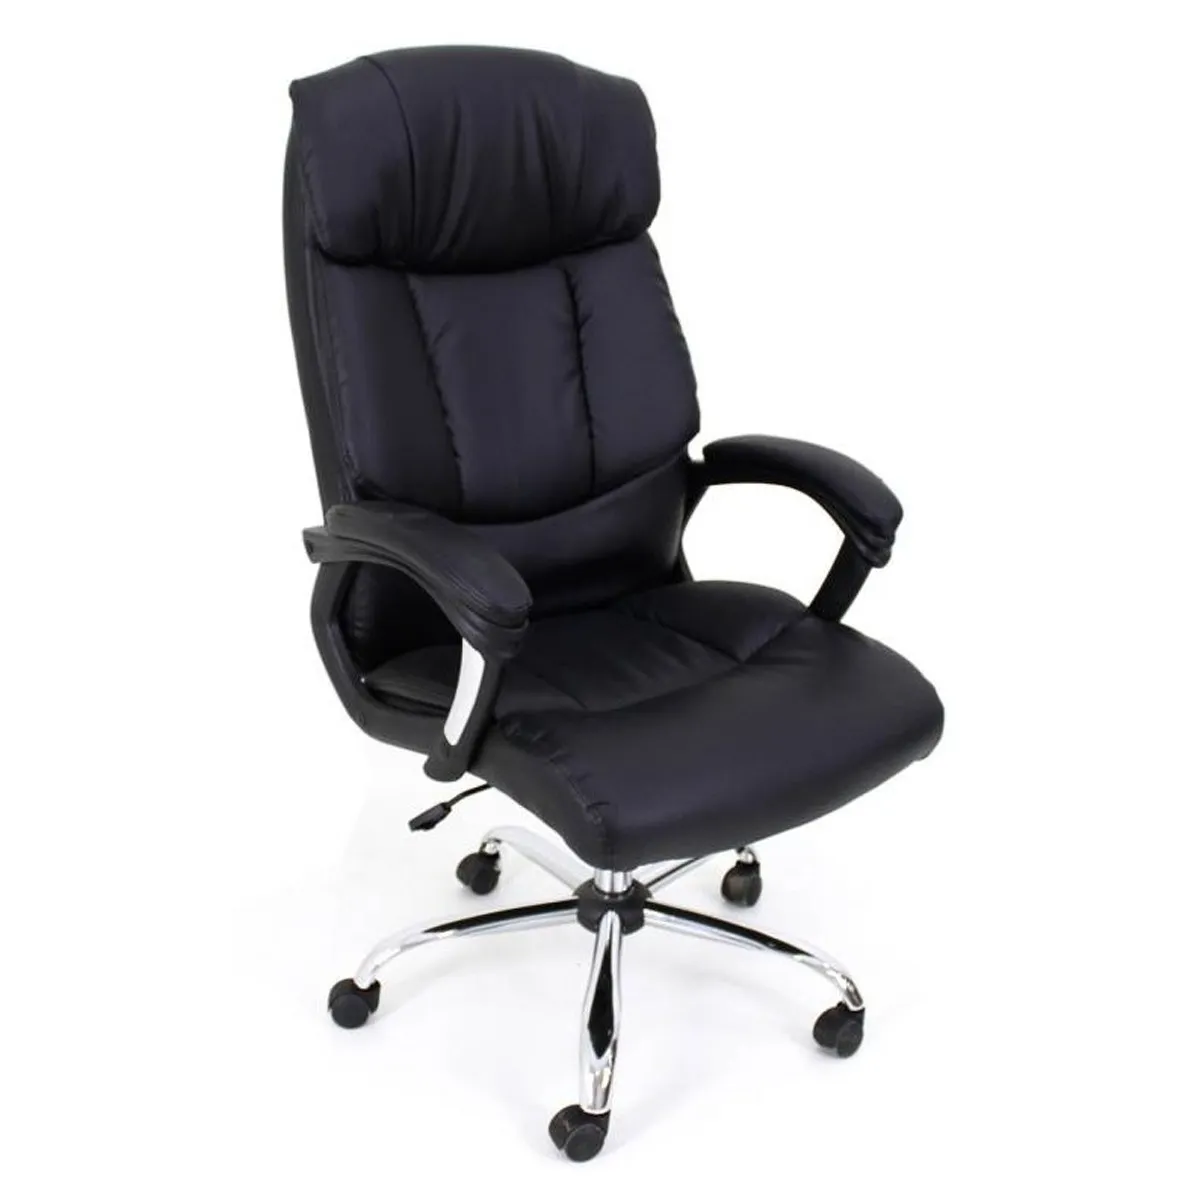 Офисное кресло Deco BX-3008 Black